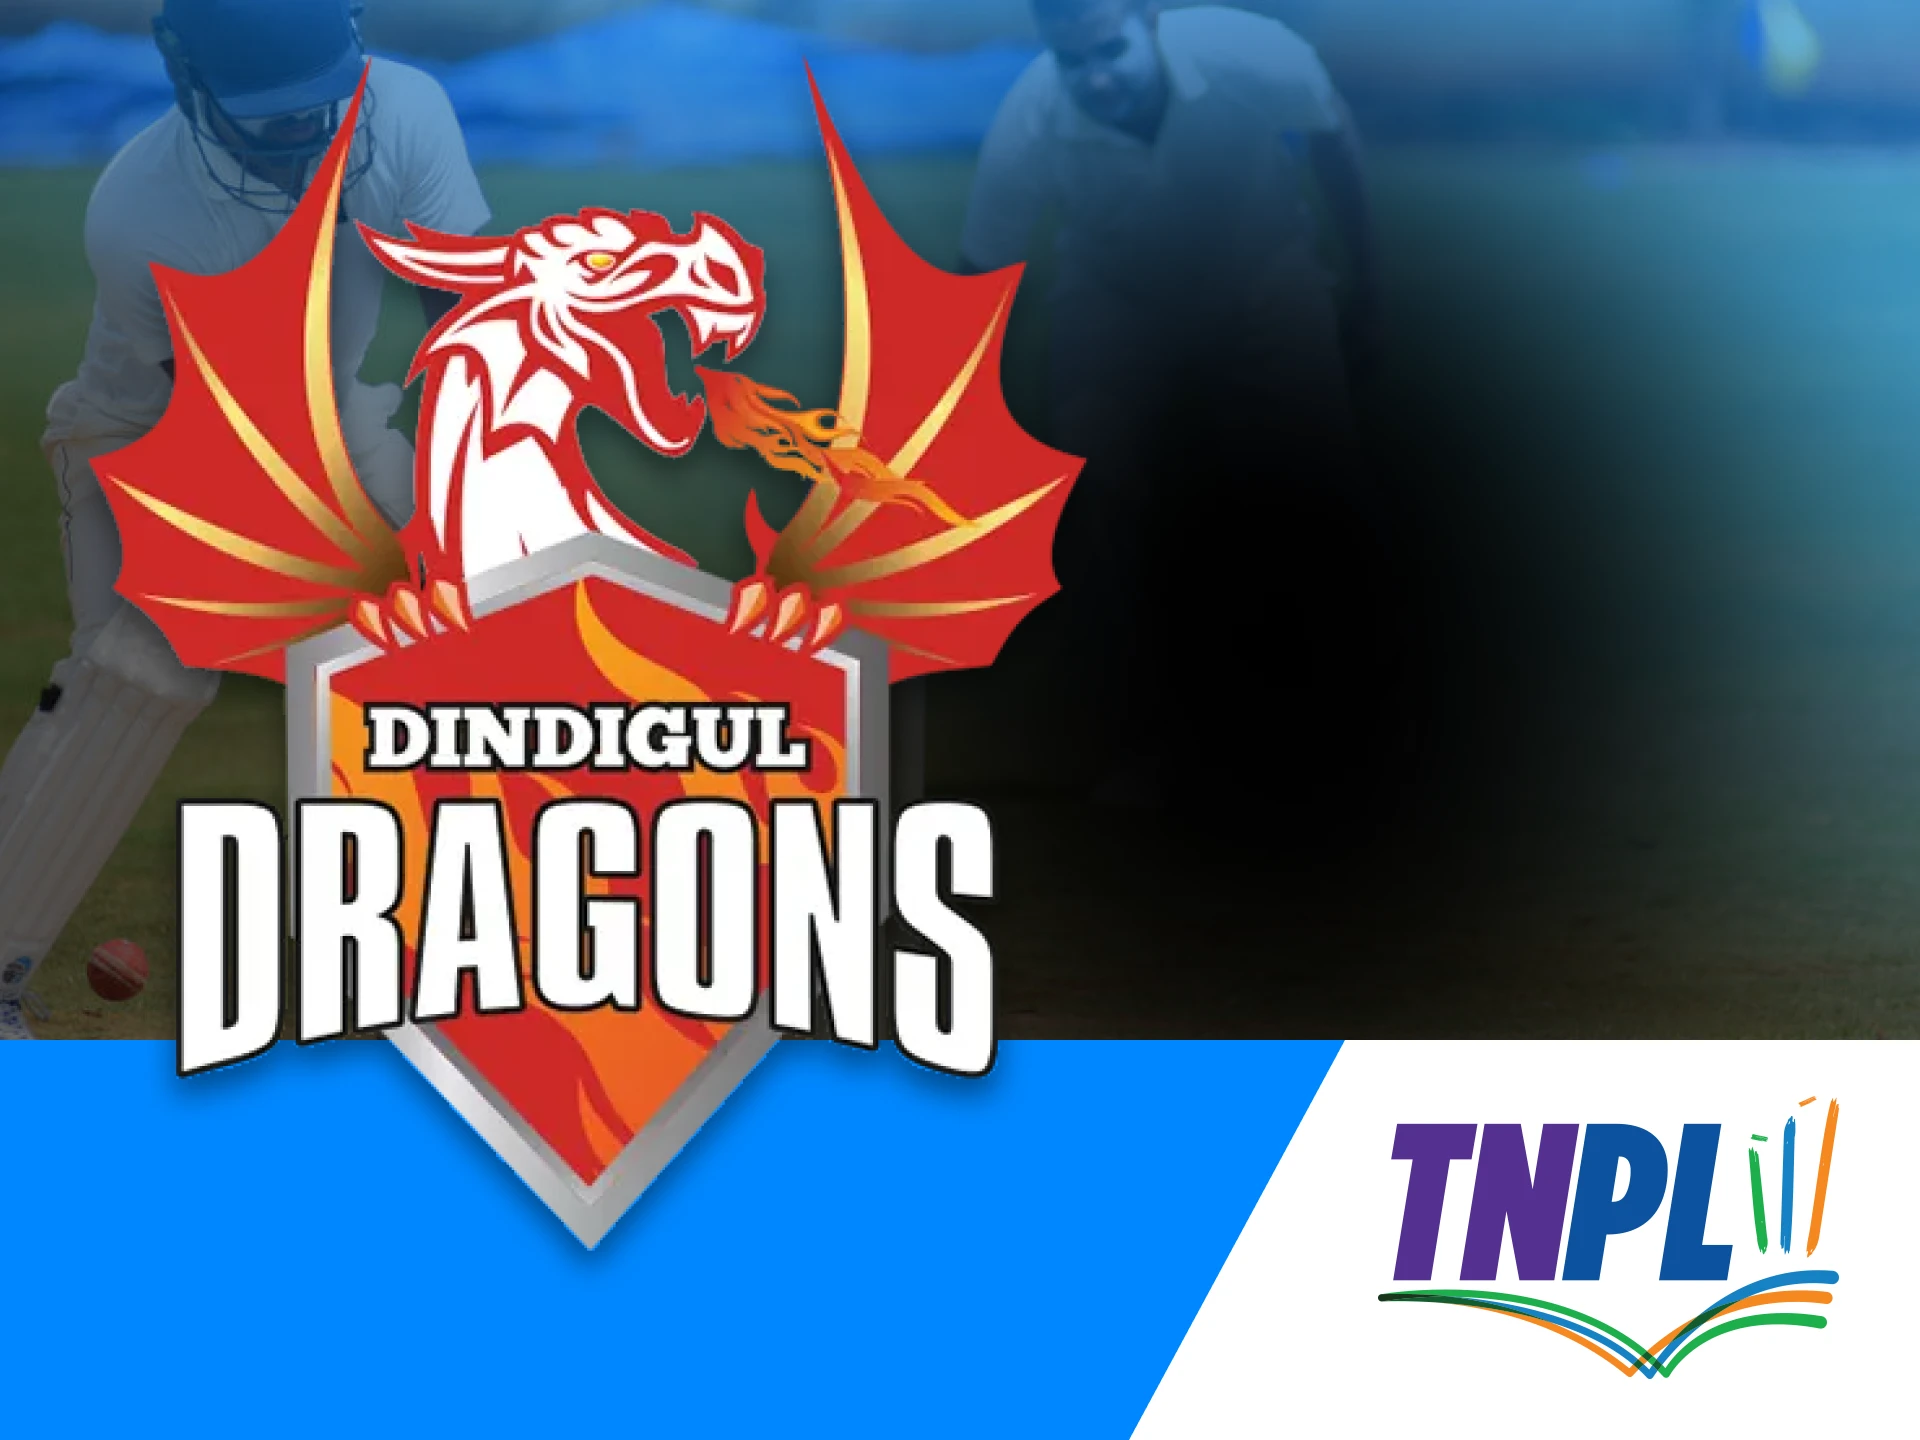 The Dindigul Dragons team represents Dindigul, Tamil Nadu.